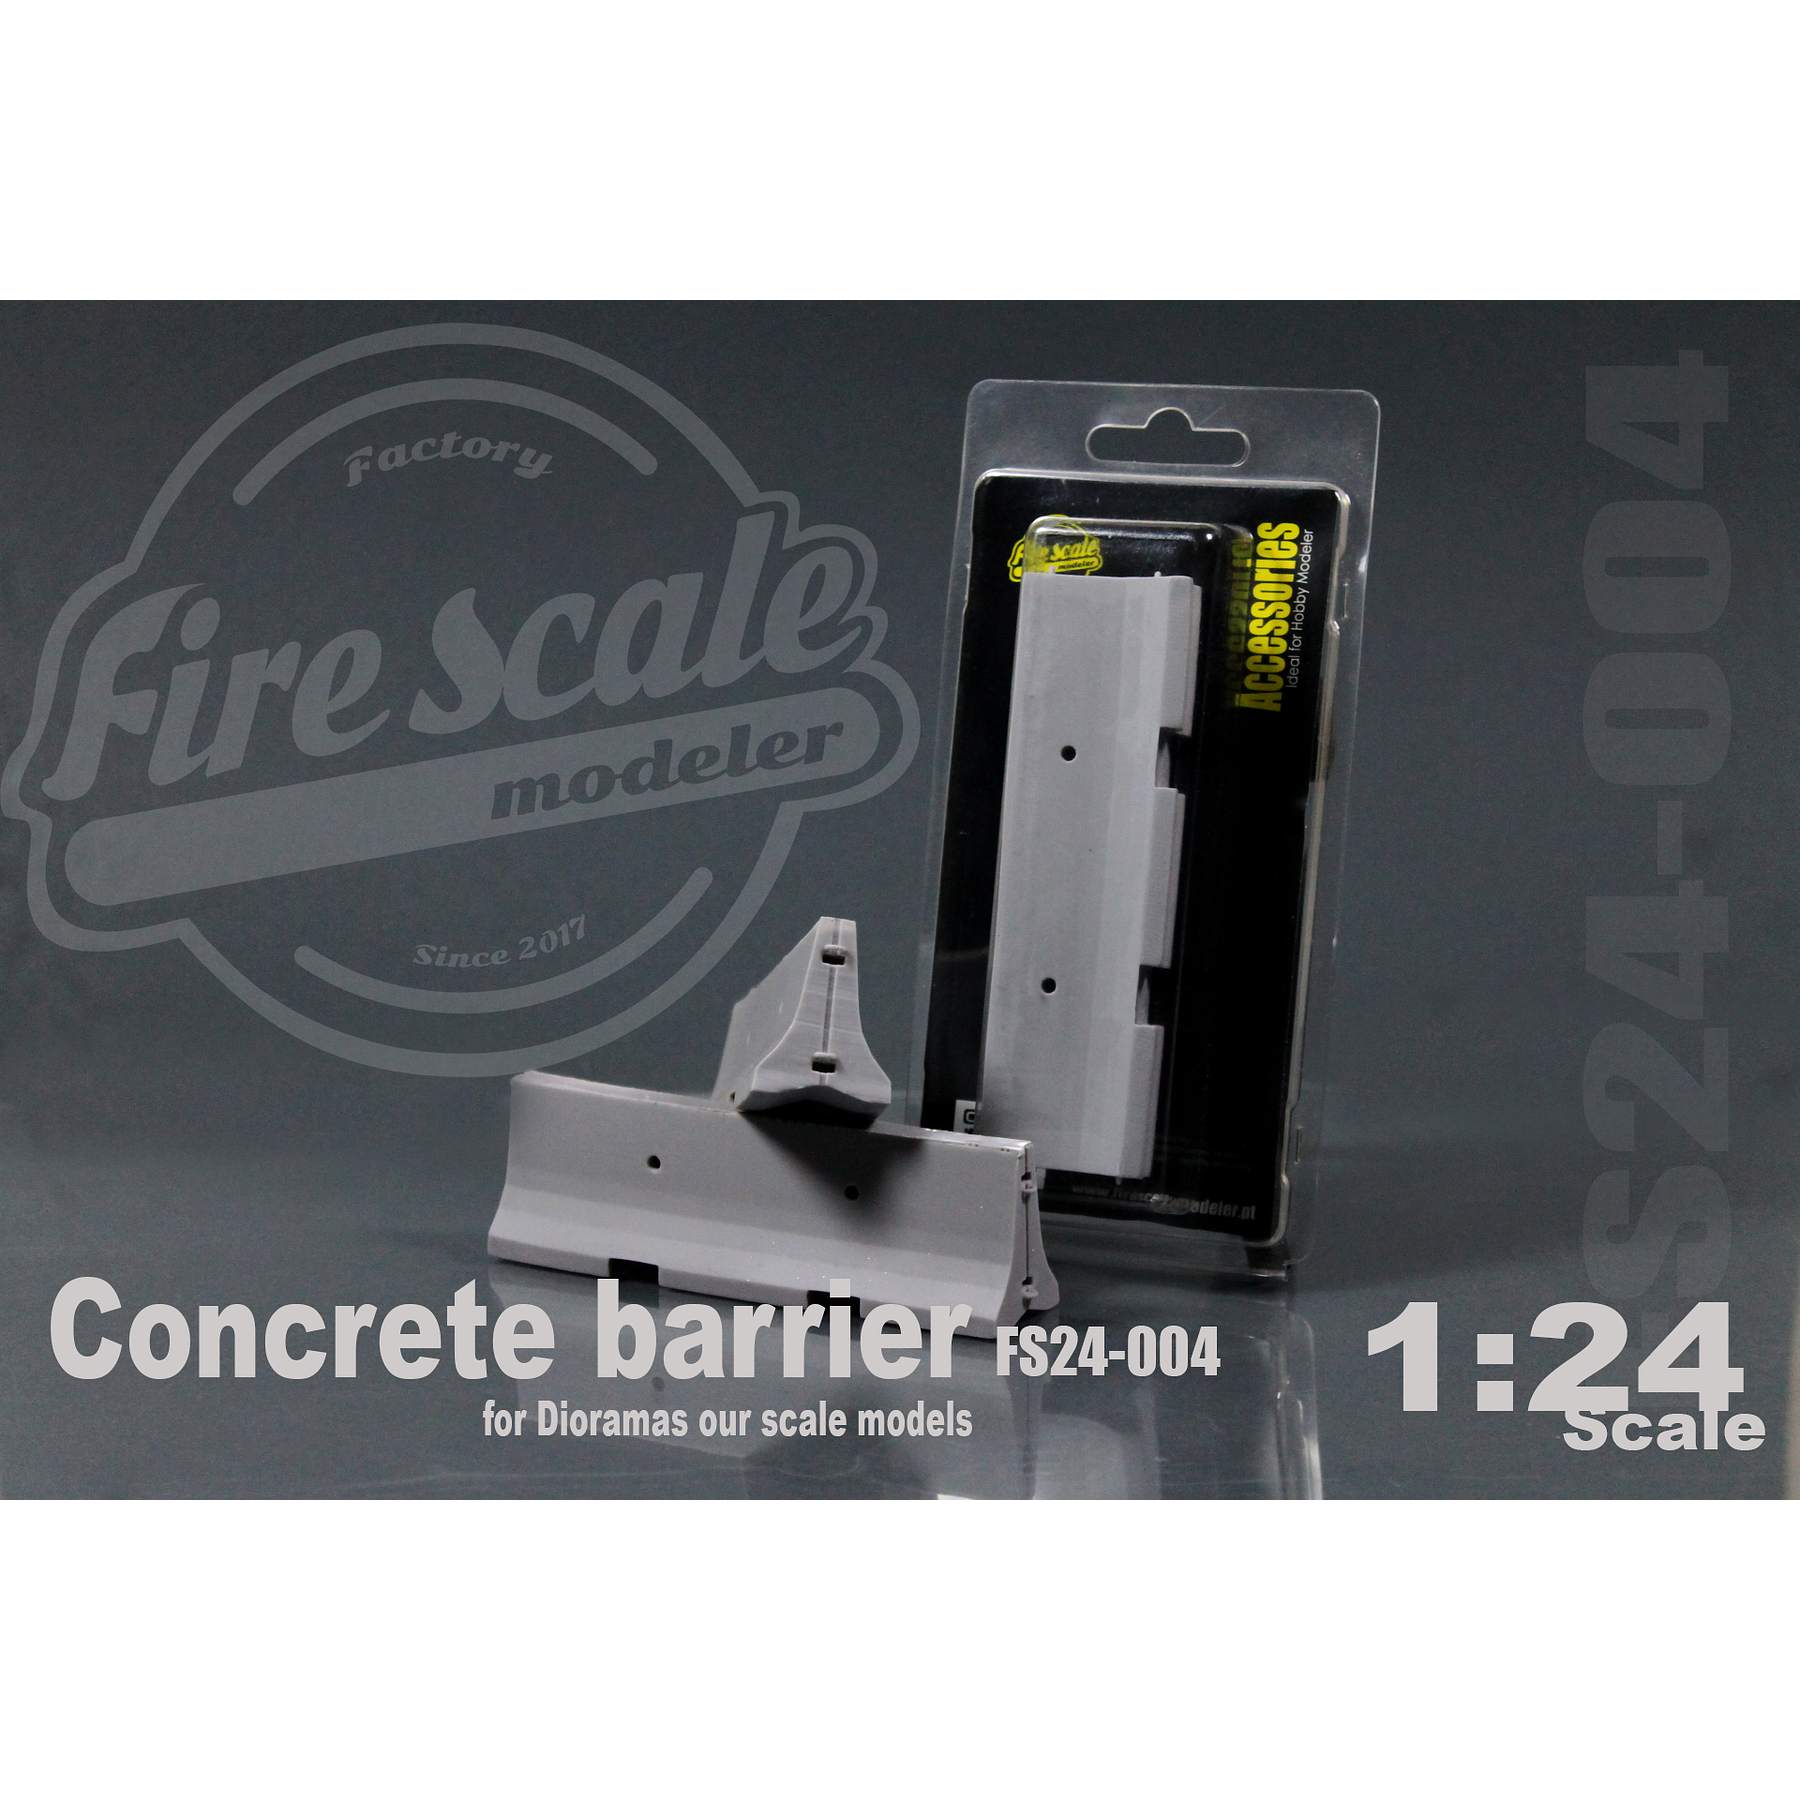 Concrete Barrier 1:24 Scale